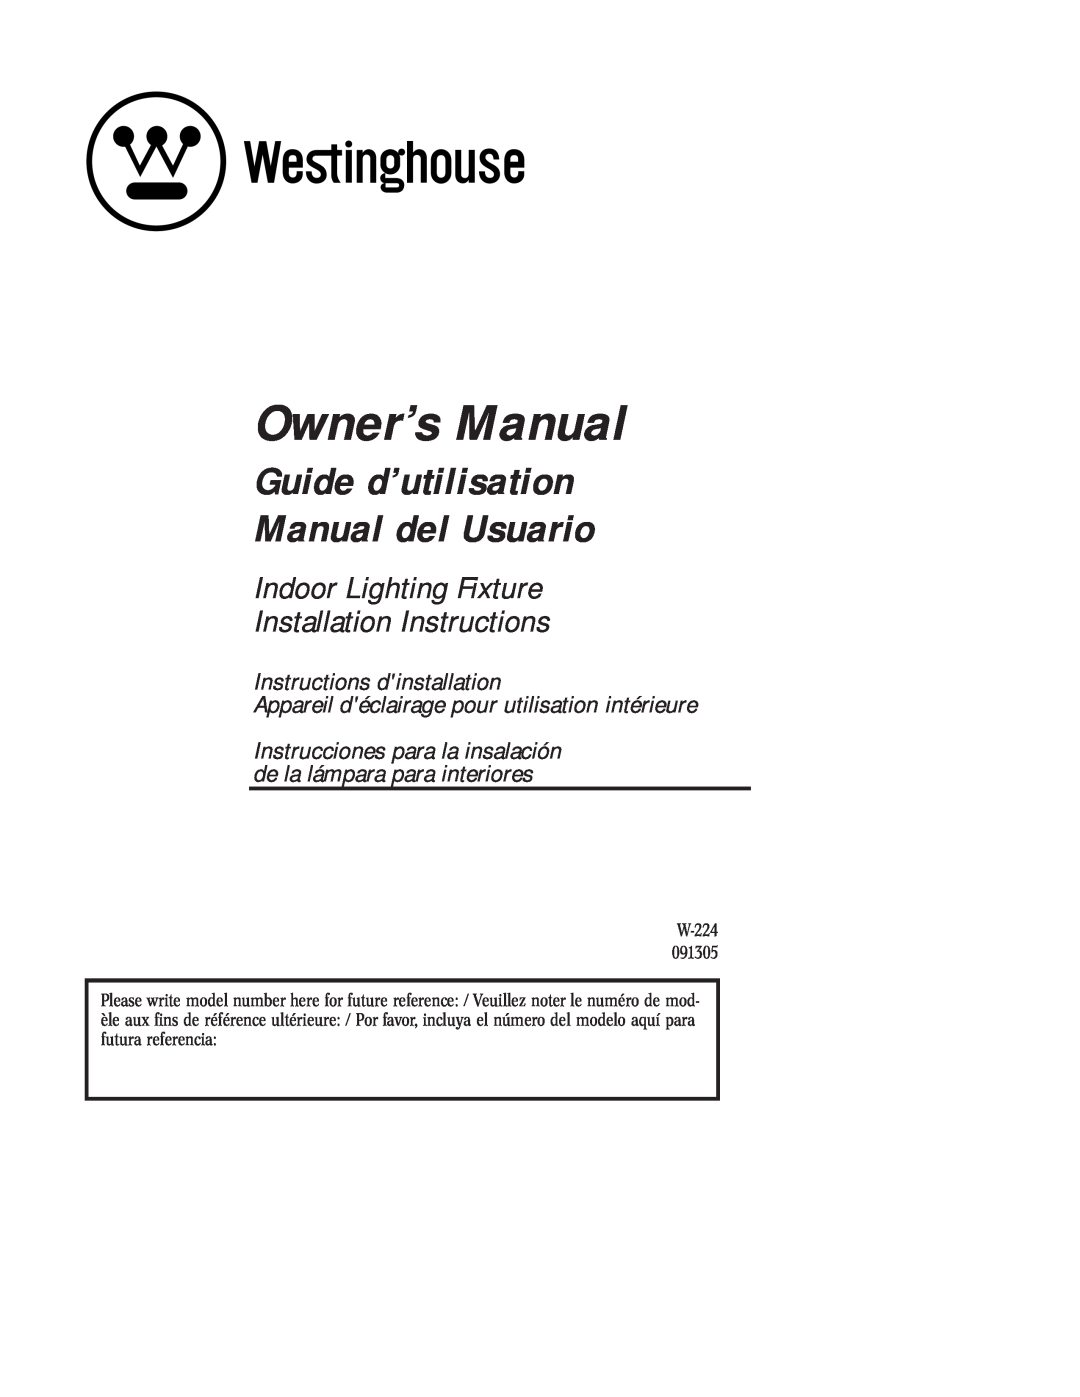 Westinghouse W-224 091305 owner manual Guide d’utilisation Manual del Usuario, Instructions dinstallation 